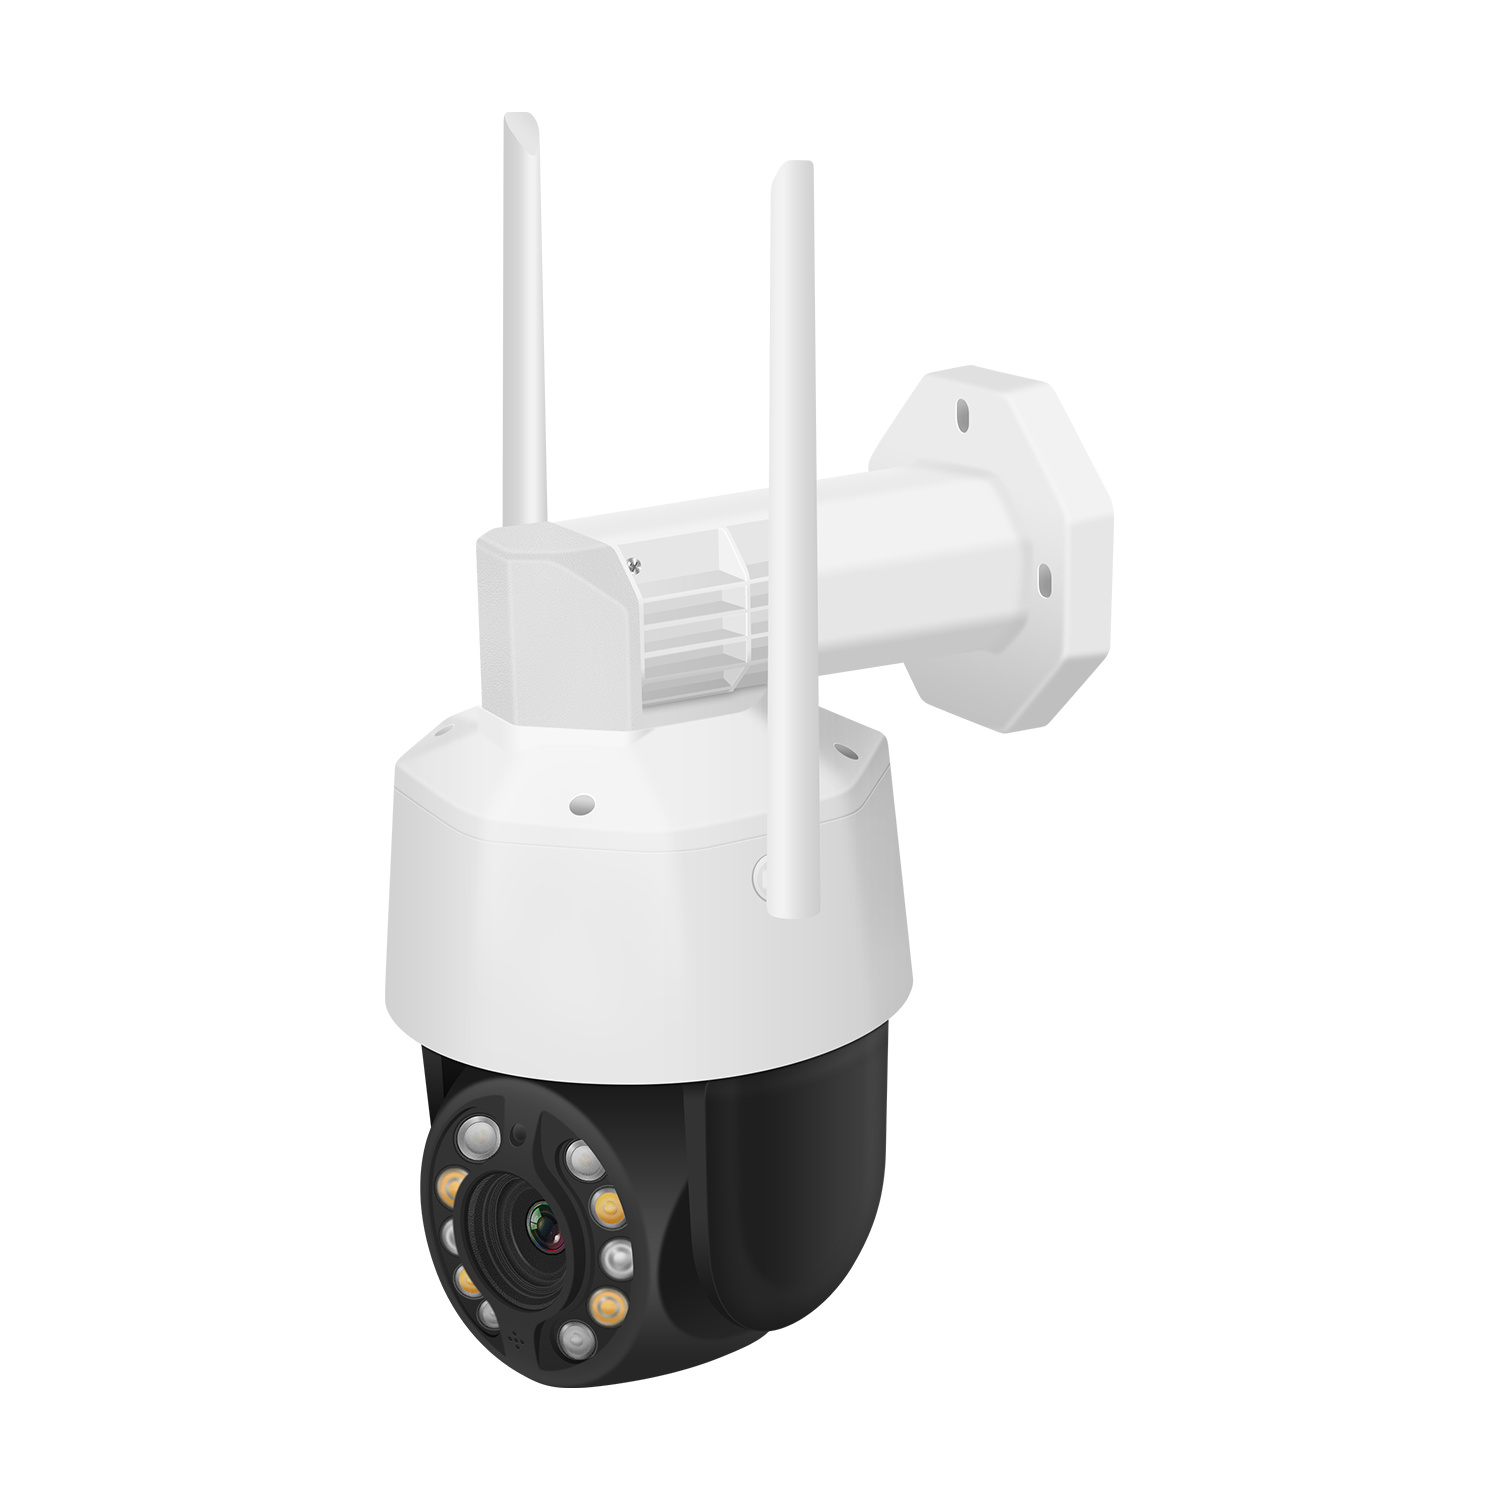 IP Camera 5MP 20xzoom 4G Outdoor PTZ Camera 2-Way Audio Waterproof CCTV Security Surveillance